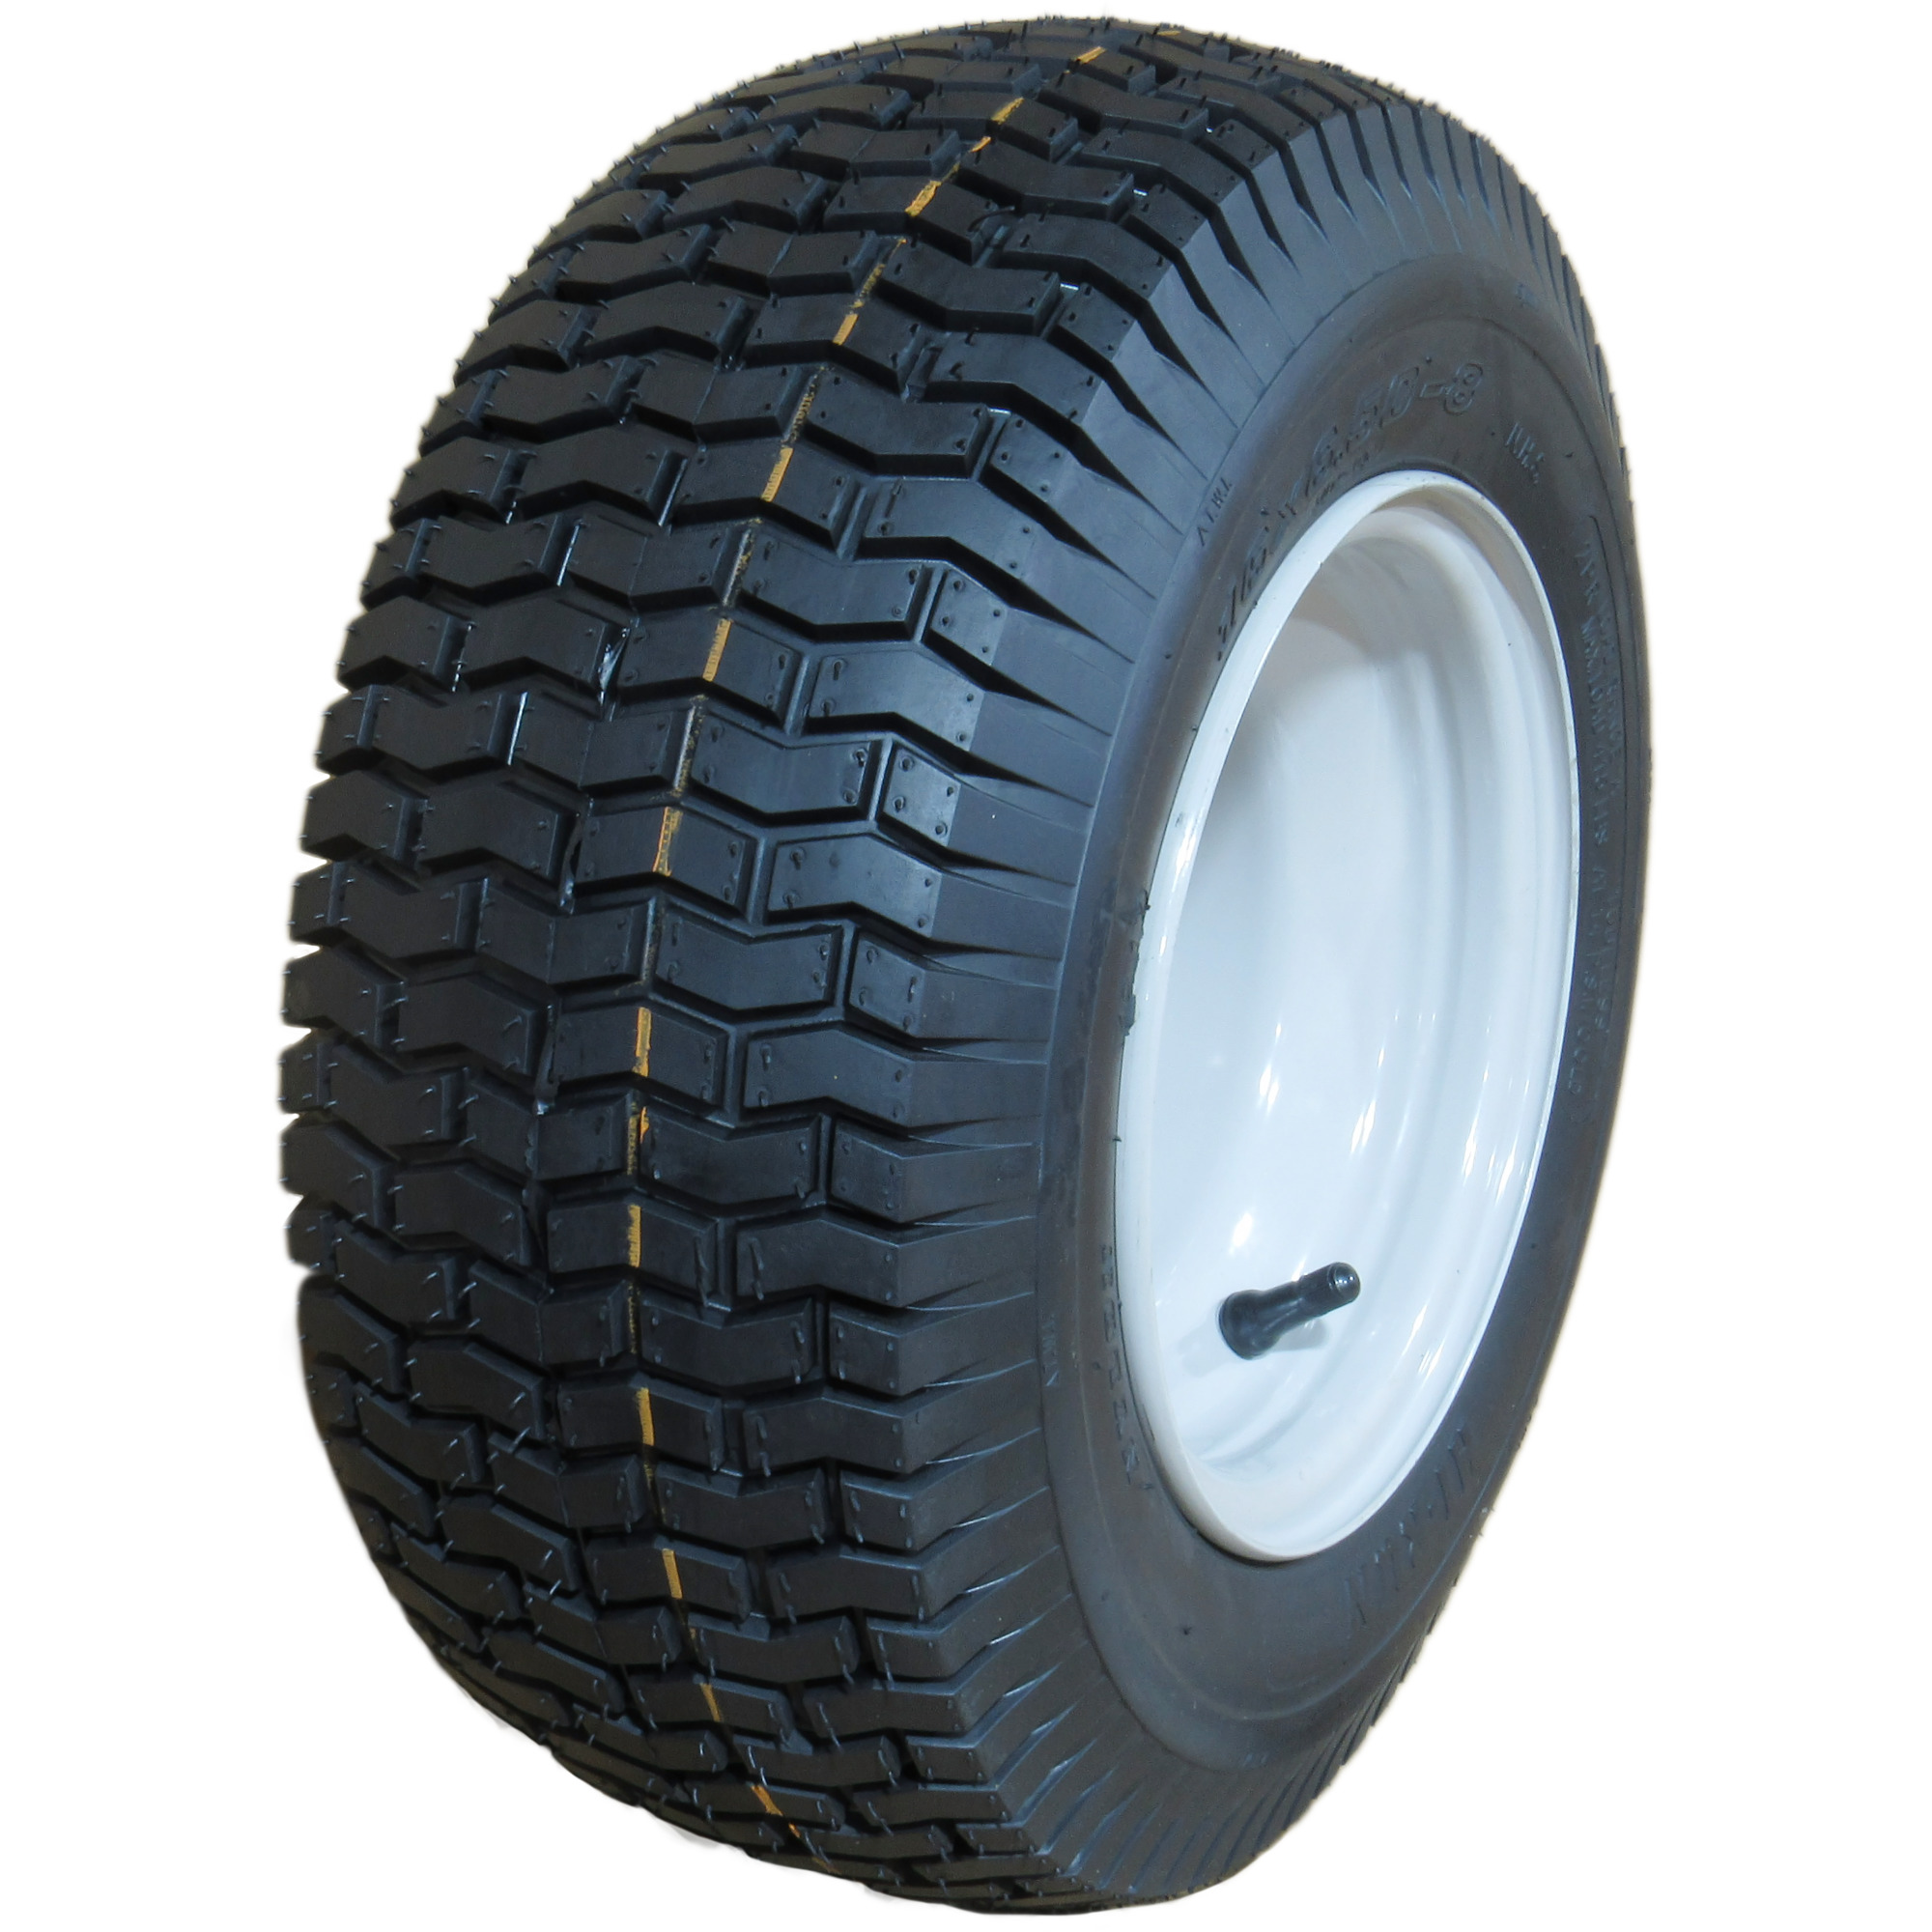 HI-RUN, Lawn Garden Tire Assembly, SU12 Turf II, 3/4InchID, Tire Size 16X6.50-8 Load Range Rating A, Model ASB1084